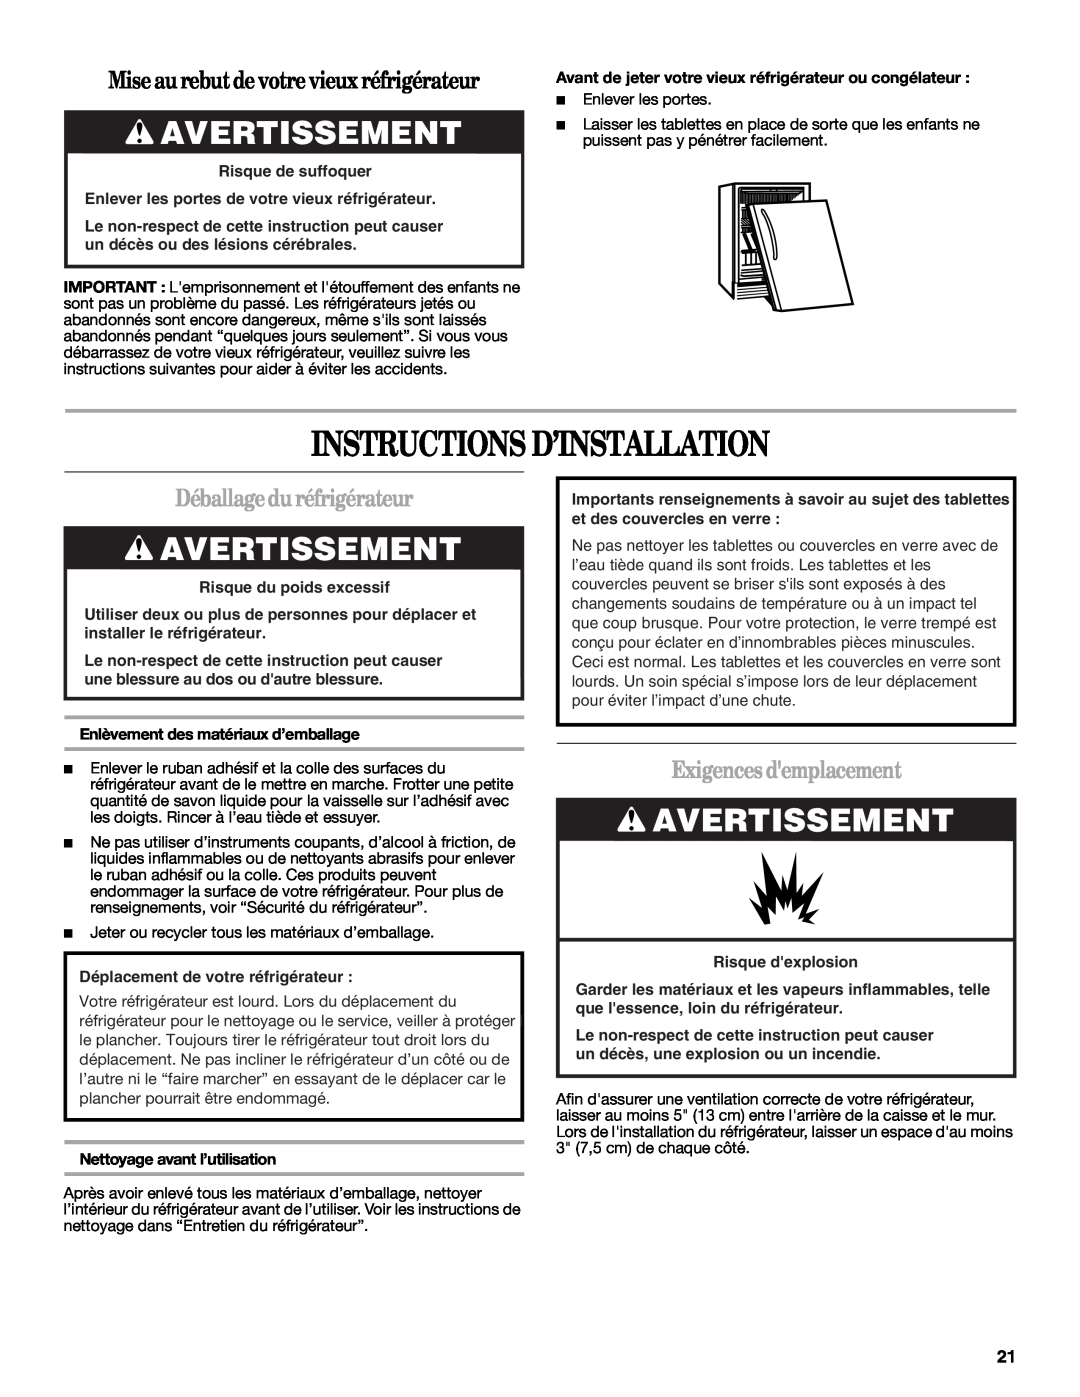 Whirlpool WAR488BSL manual Instructions D’Installation, Avertissement, Mise au rebutde votre vieux réfrigérateur 